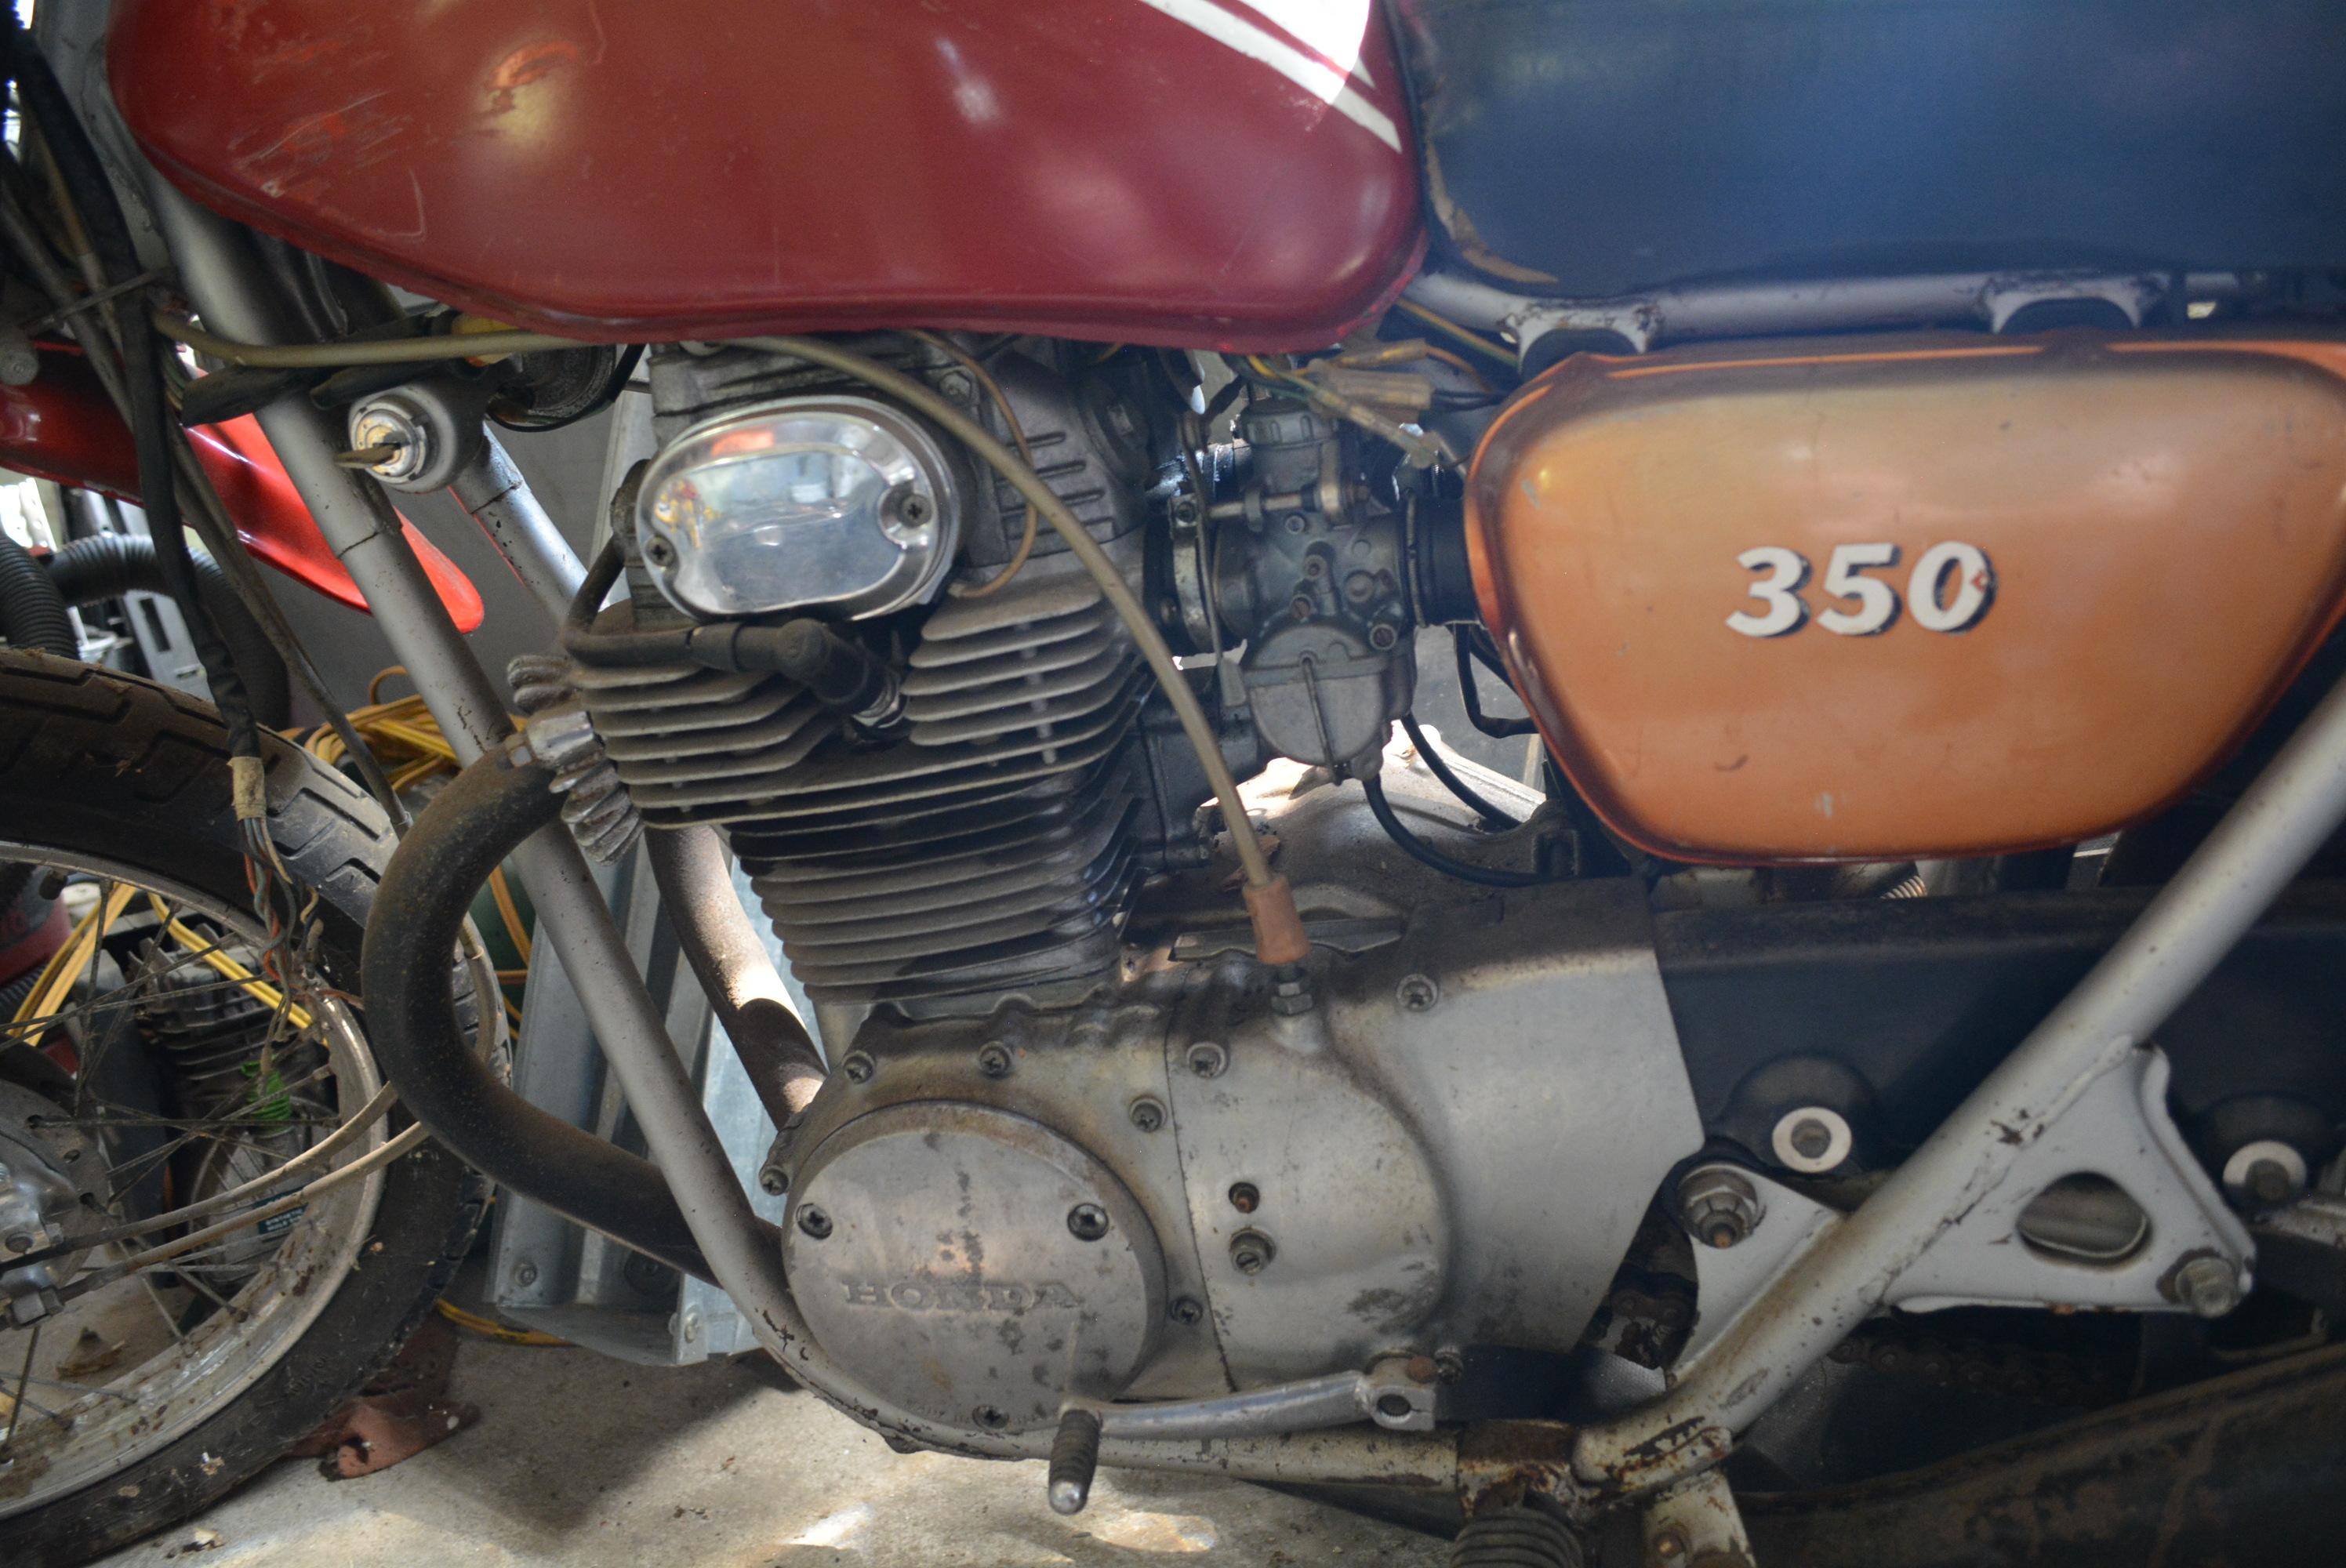 1970 Honda 350 Motorcycle, lights, shows 10,570 miles, NO KEY, has not been ran recently, might need